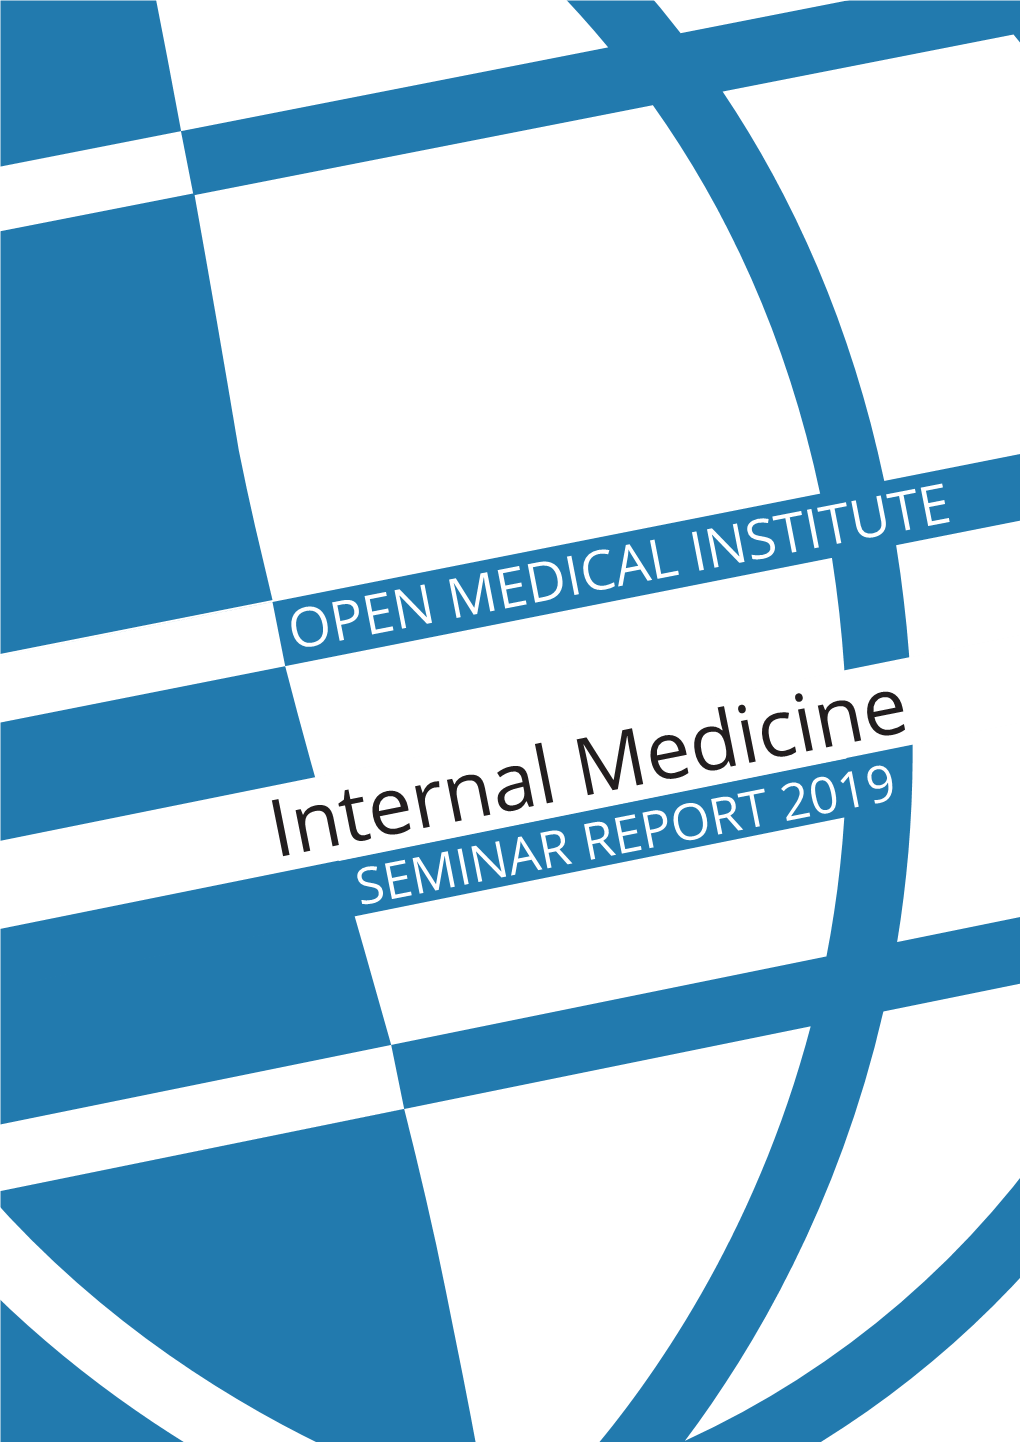 Internal Medicine SEMINAR REPORT 2019